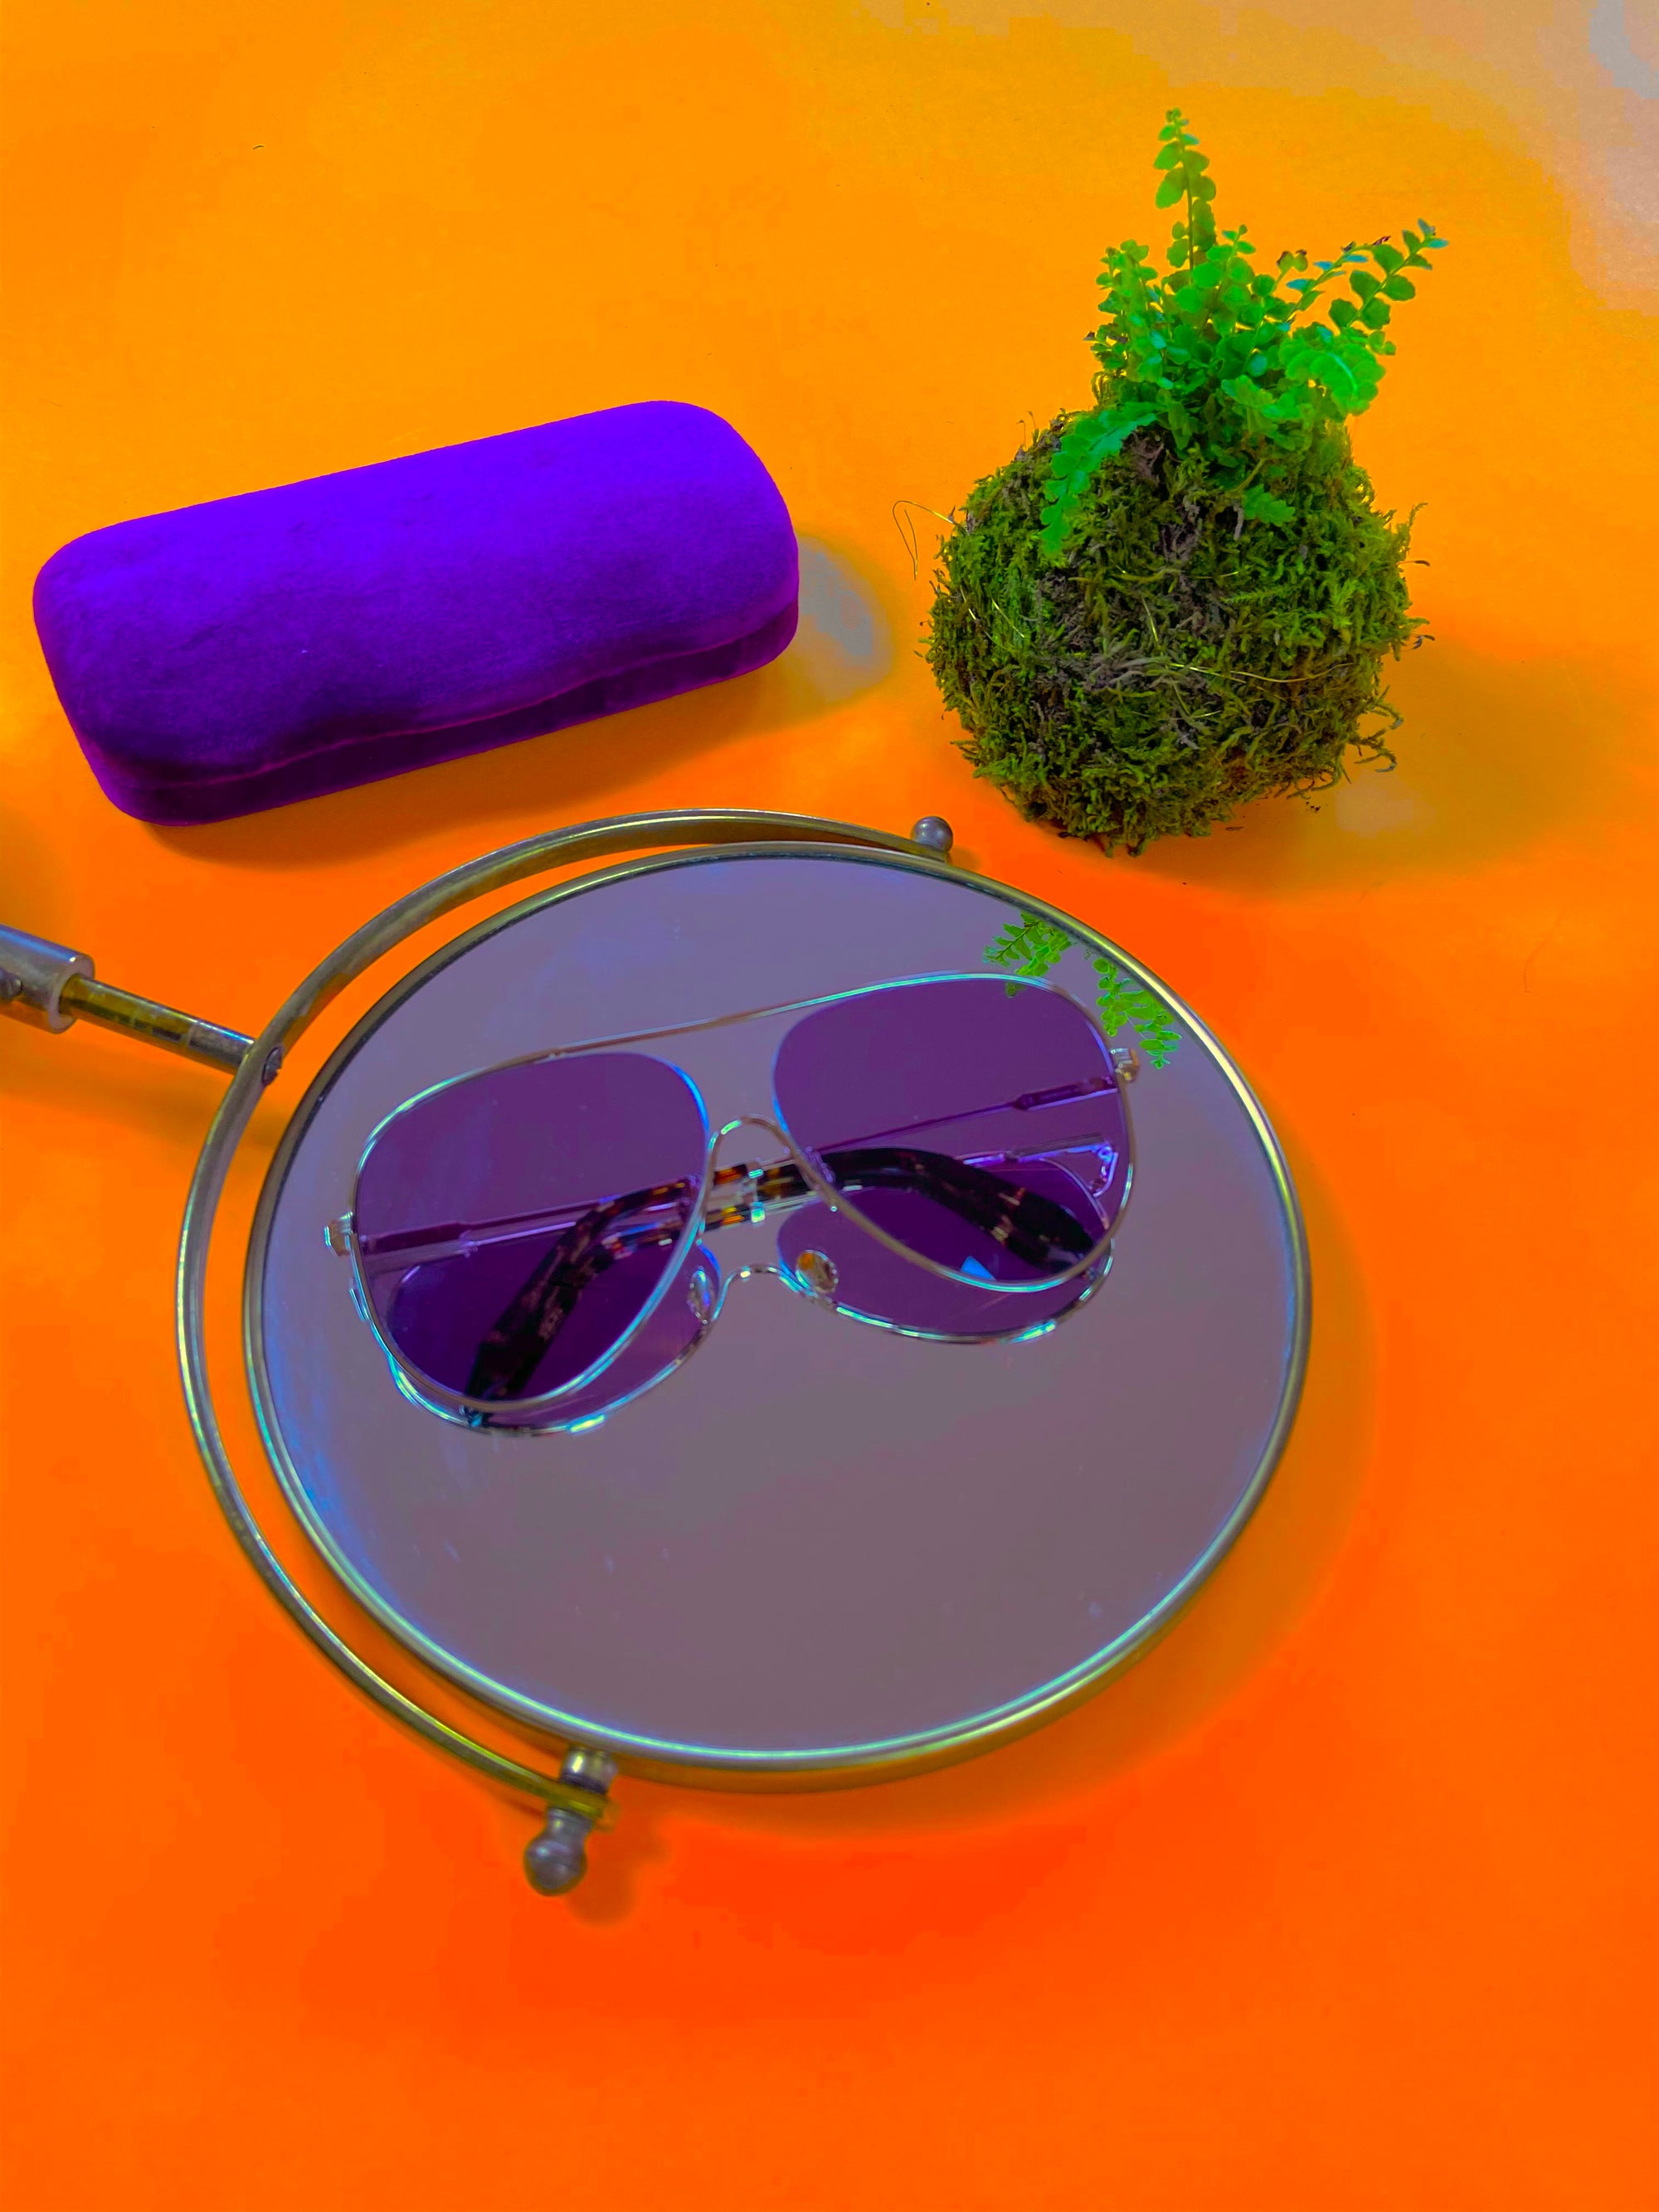 Victoria Beckham Pilot Sunglasses purple vor buntem Hintergrund.